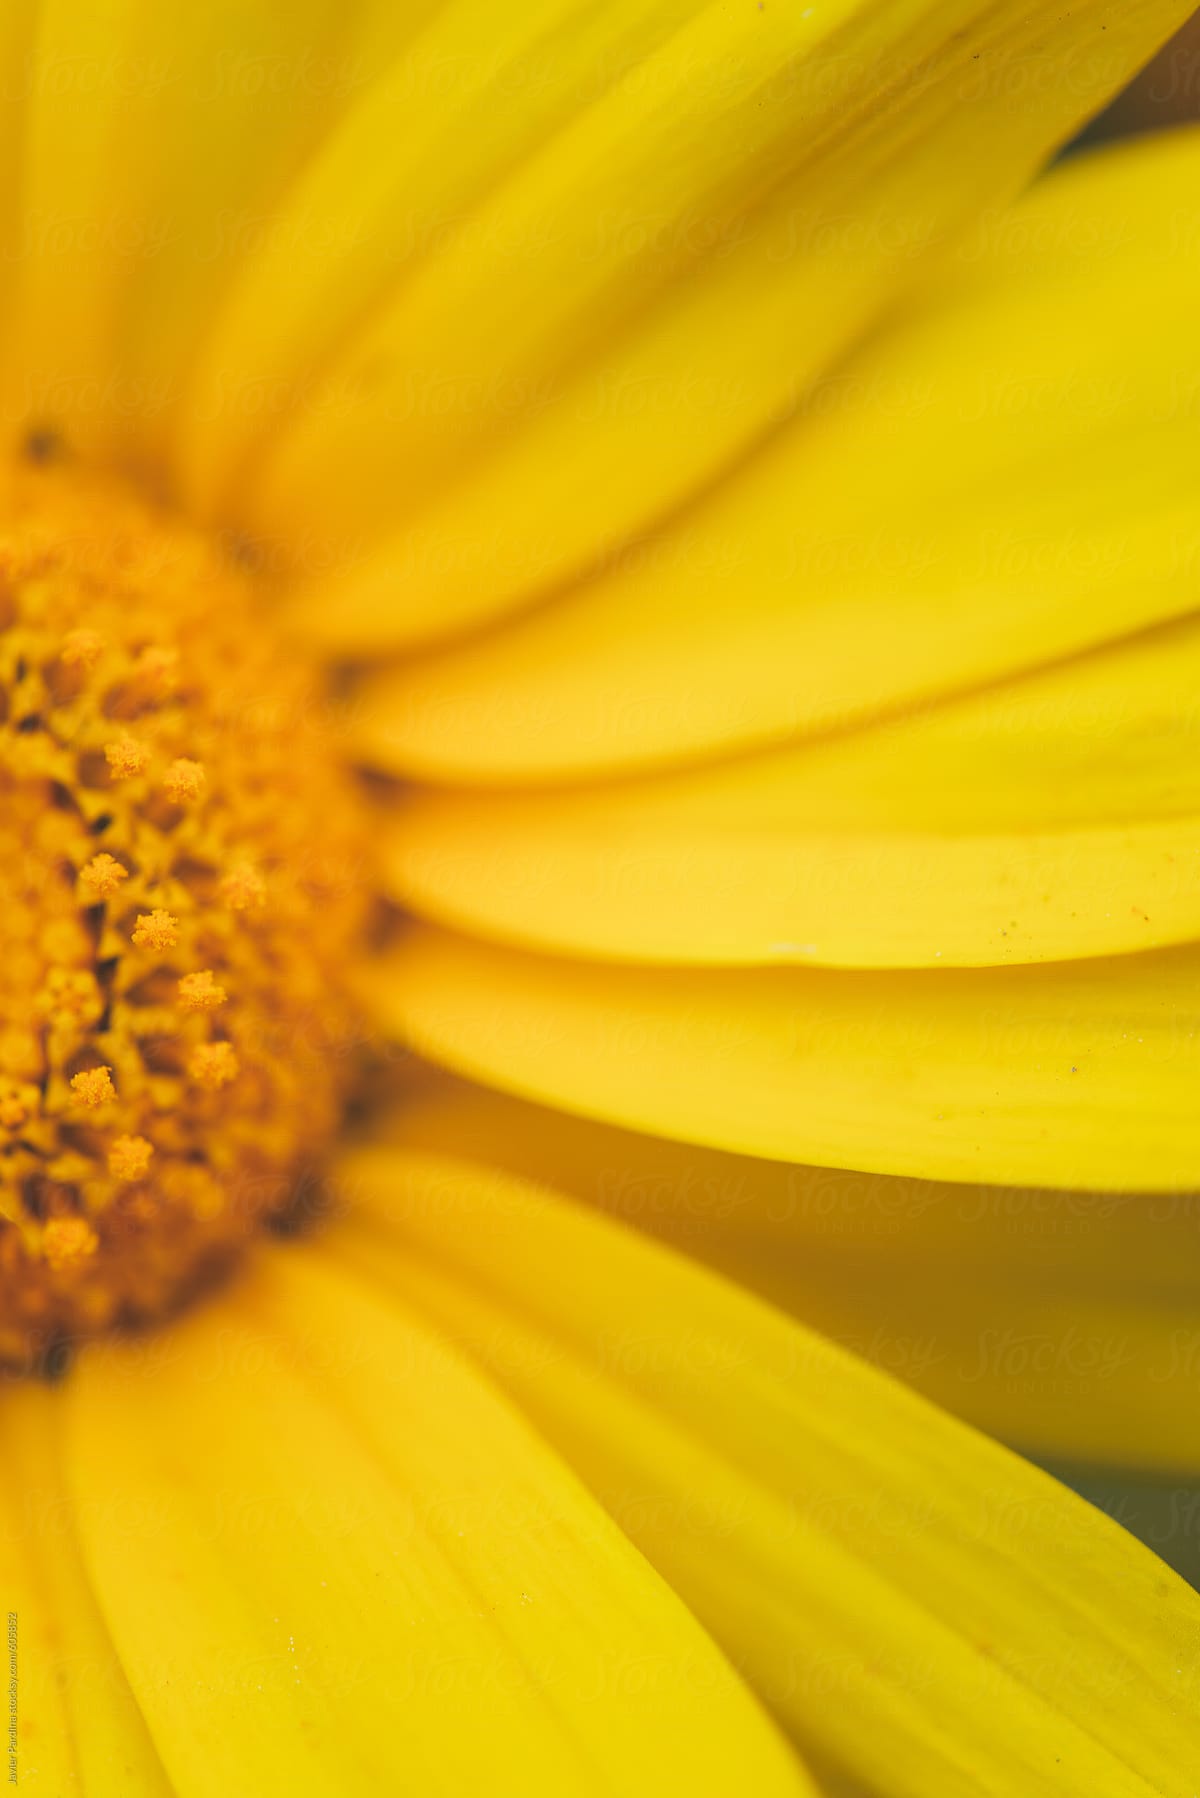 Closeup of yellow flower